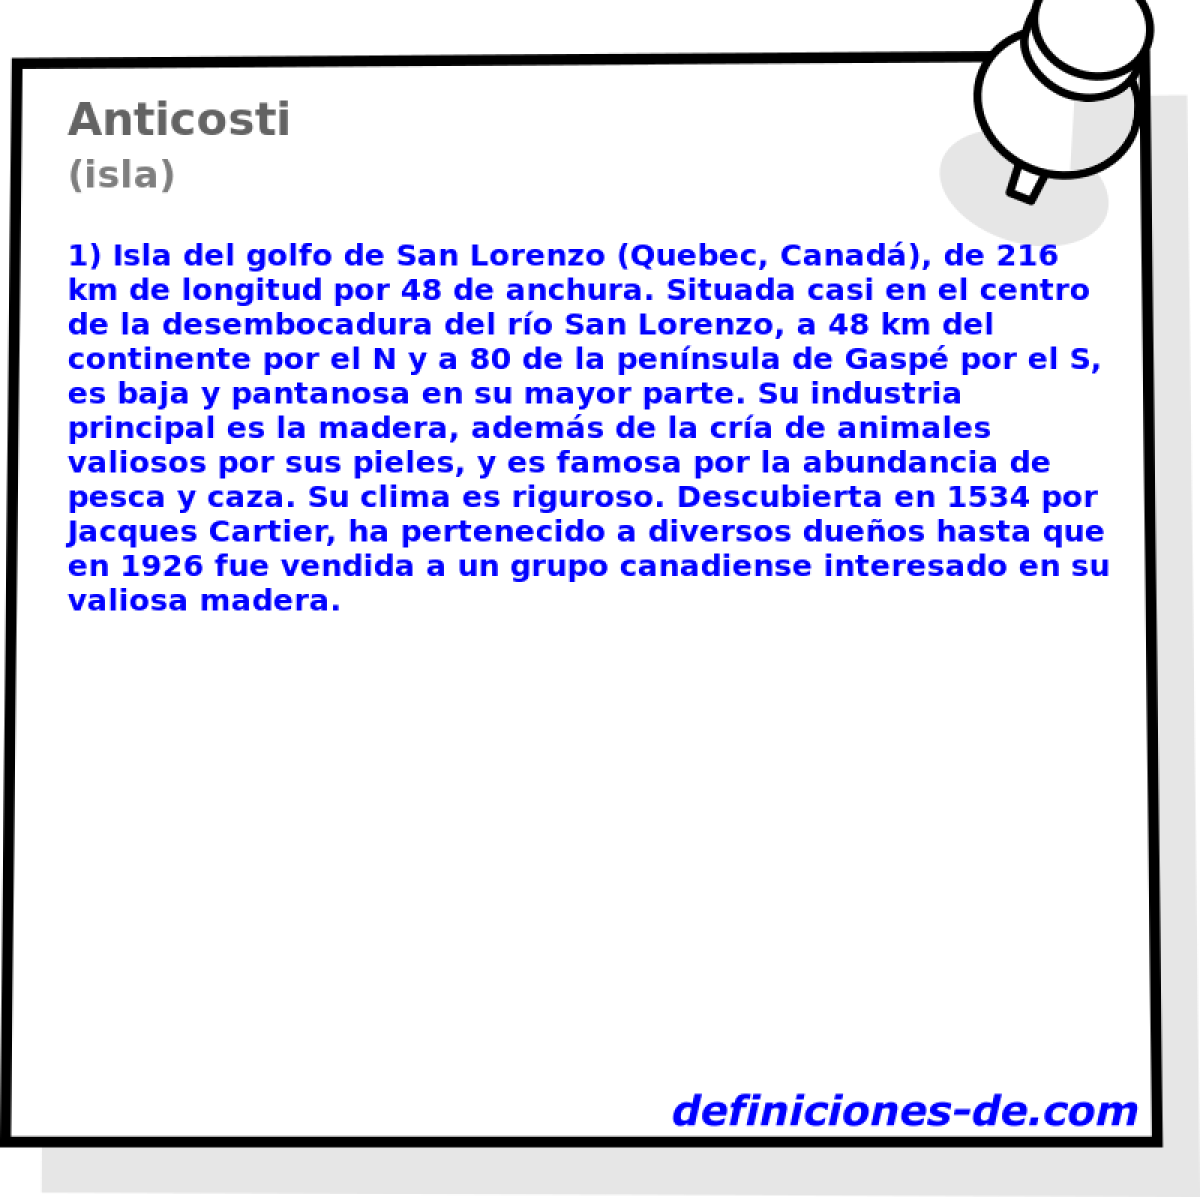 Anticosti (isla)